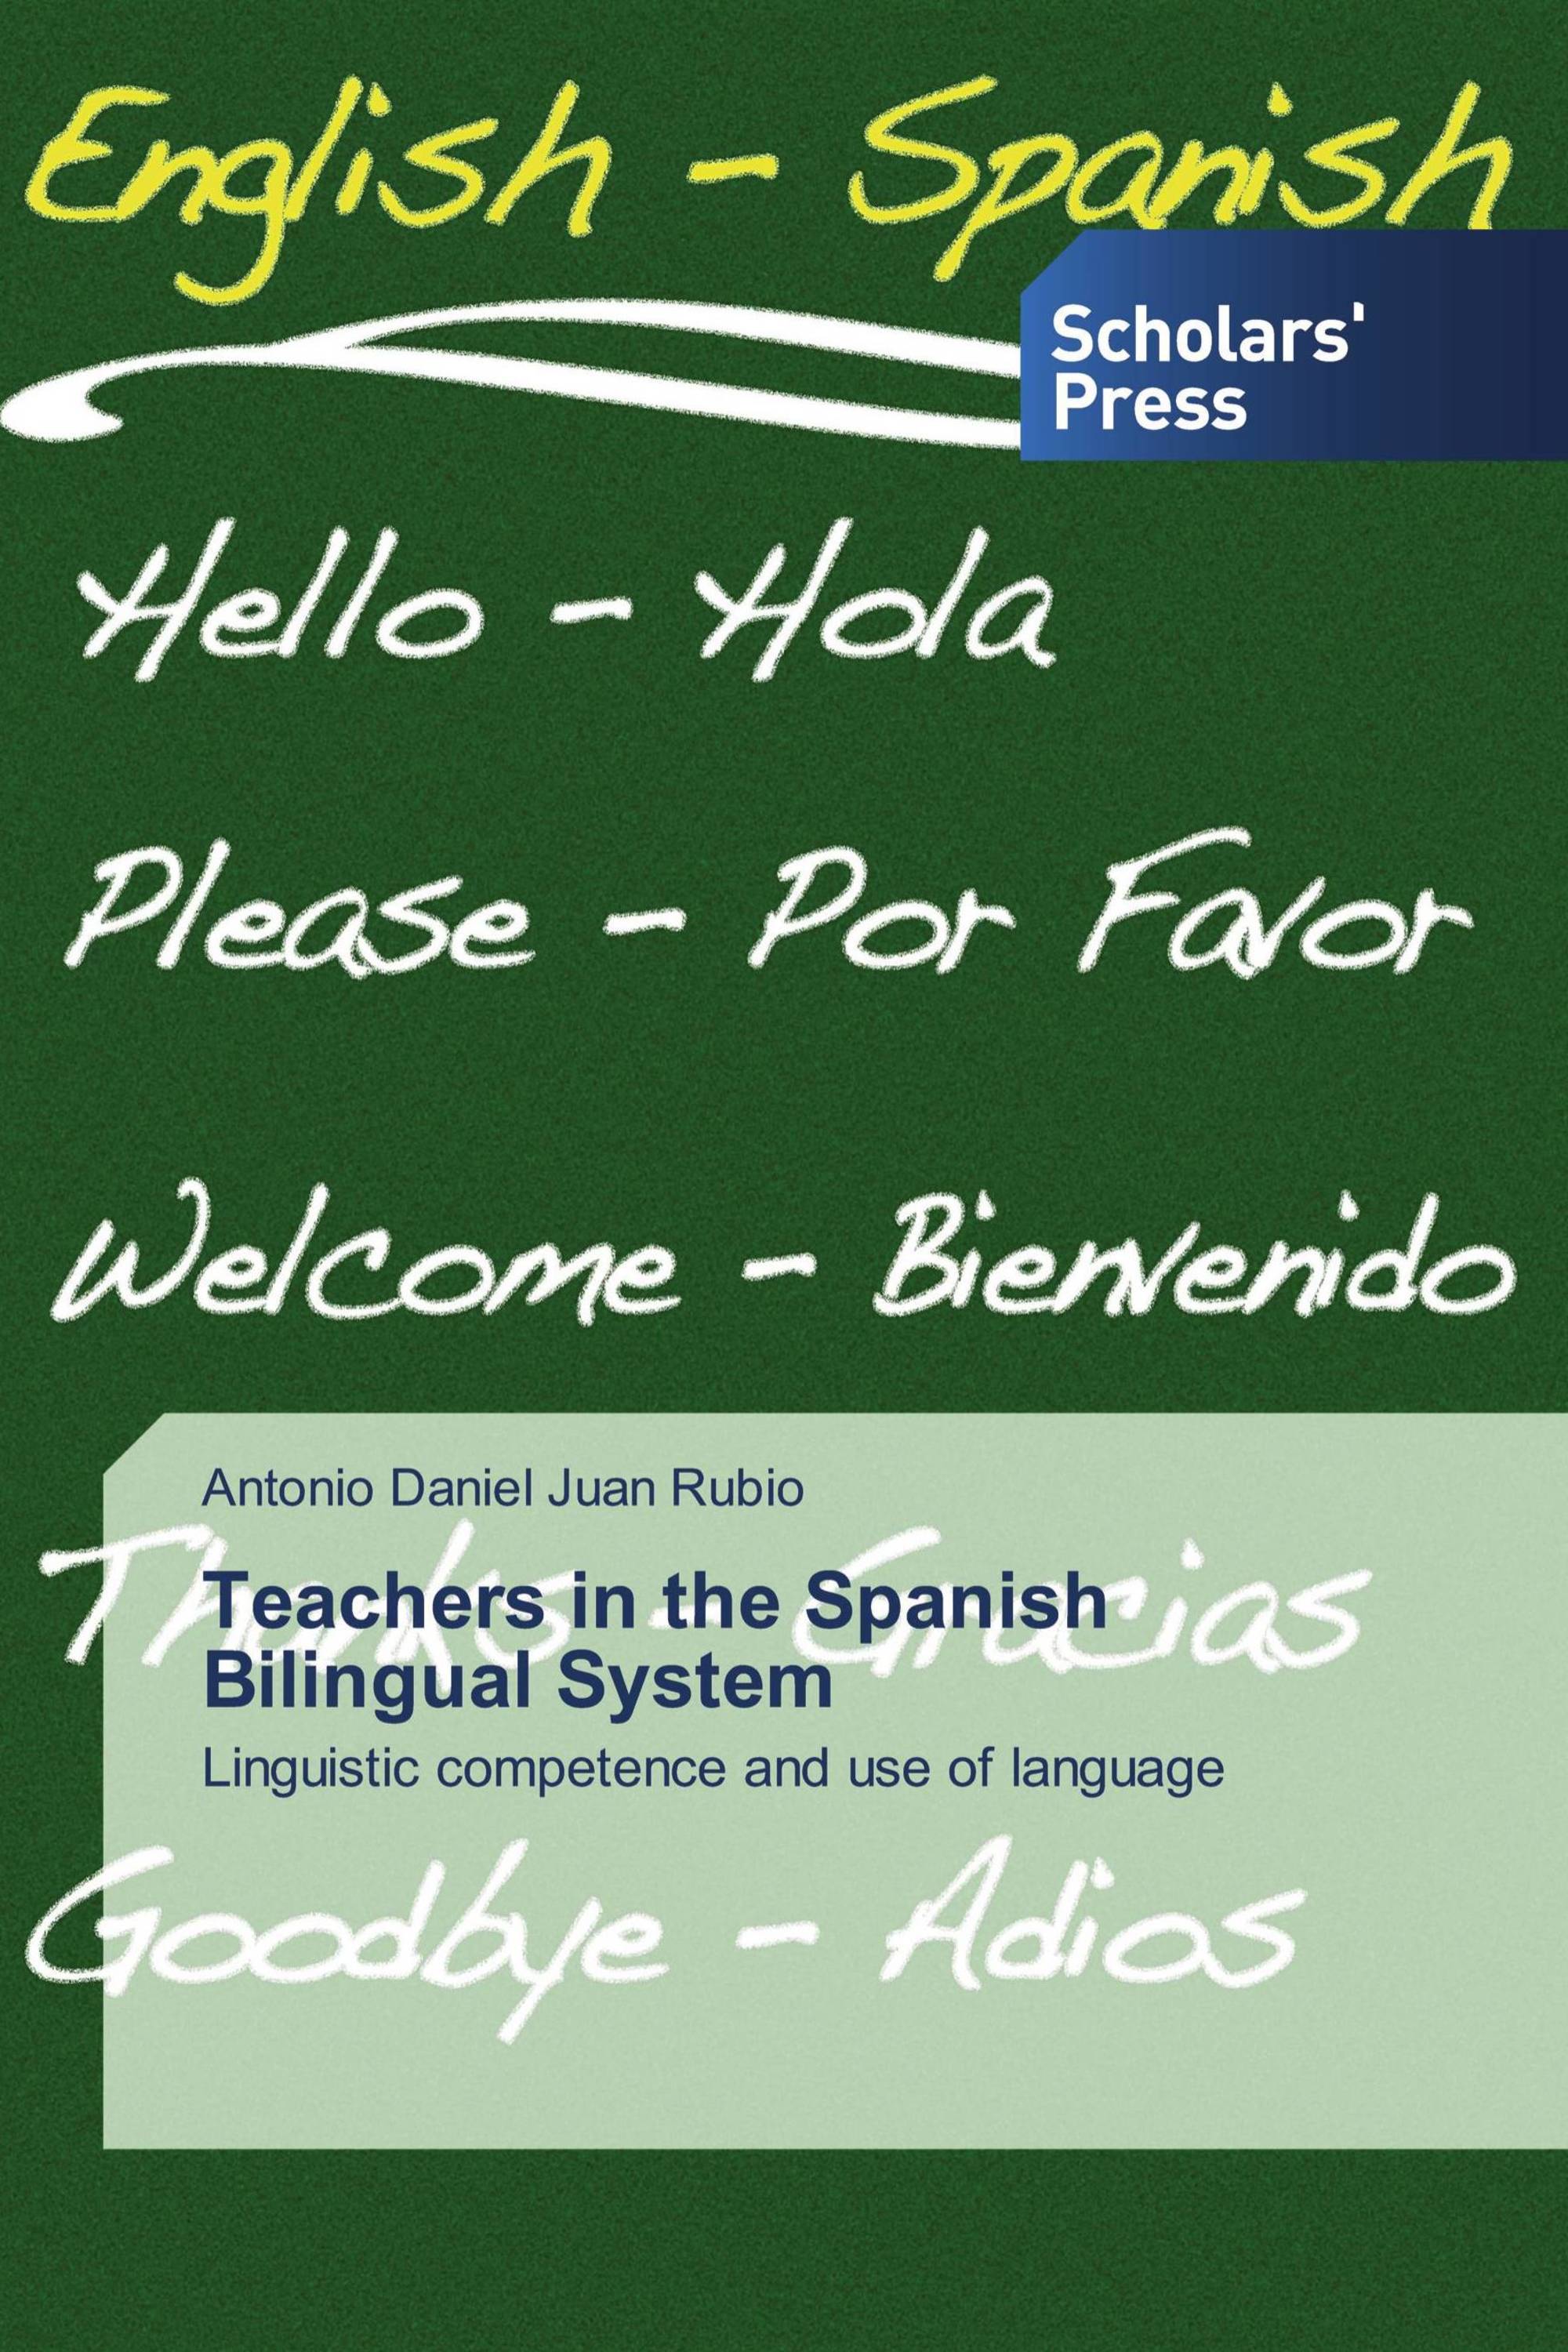 Teachers in the Spanish Bilingual System